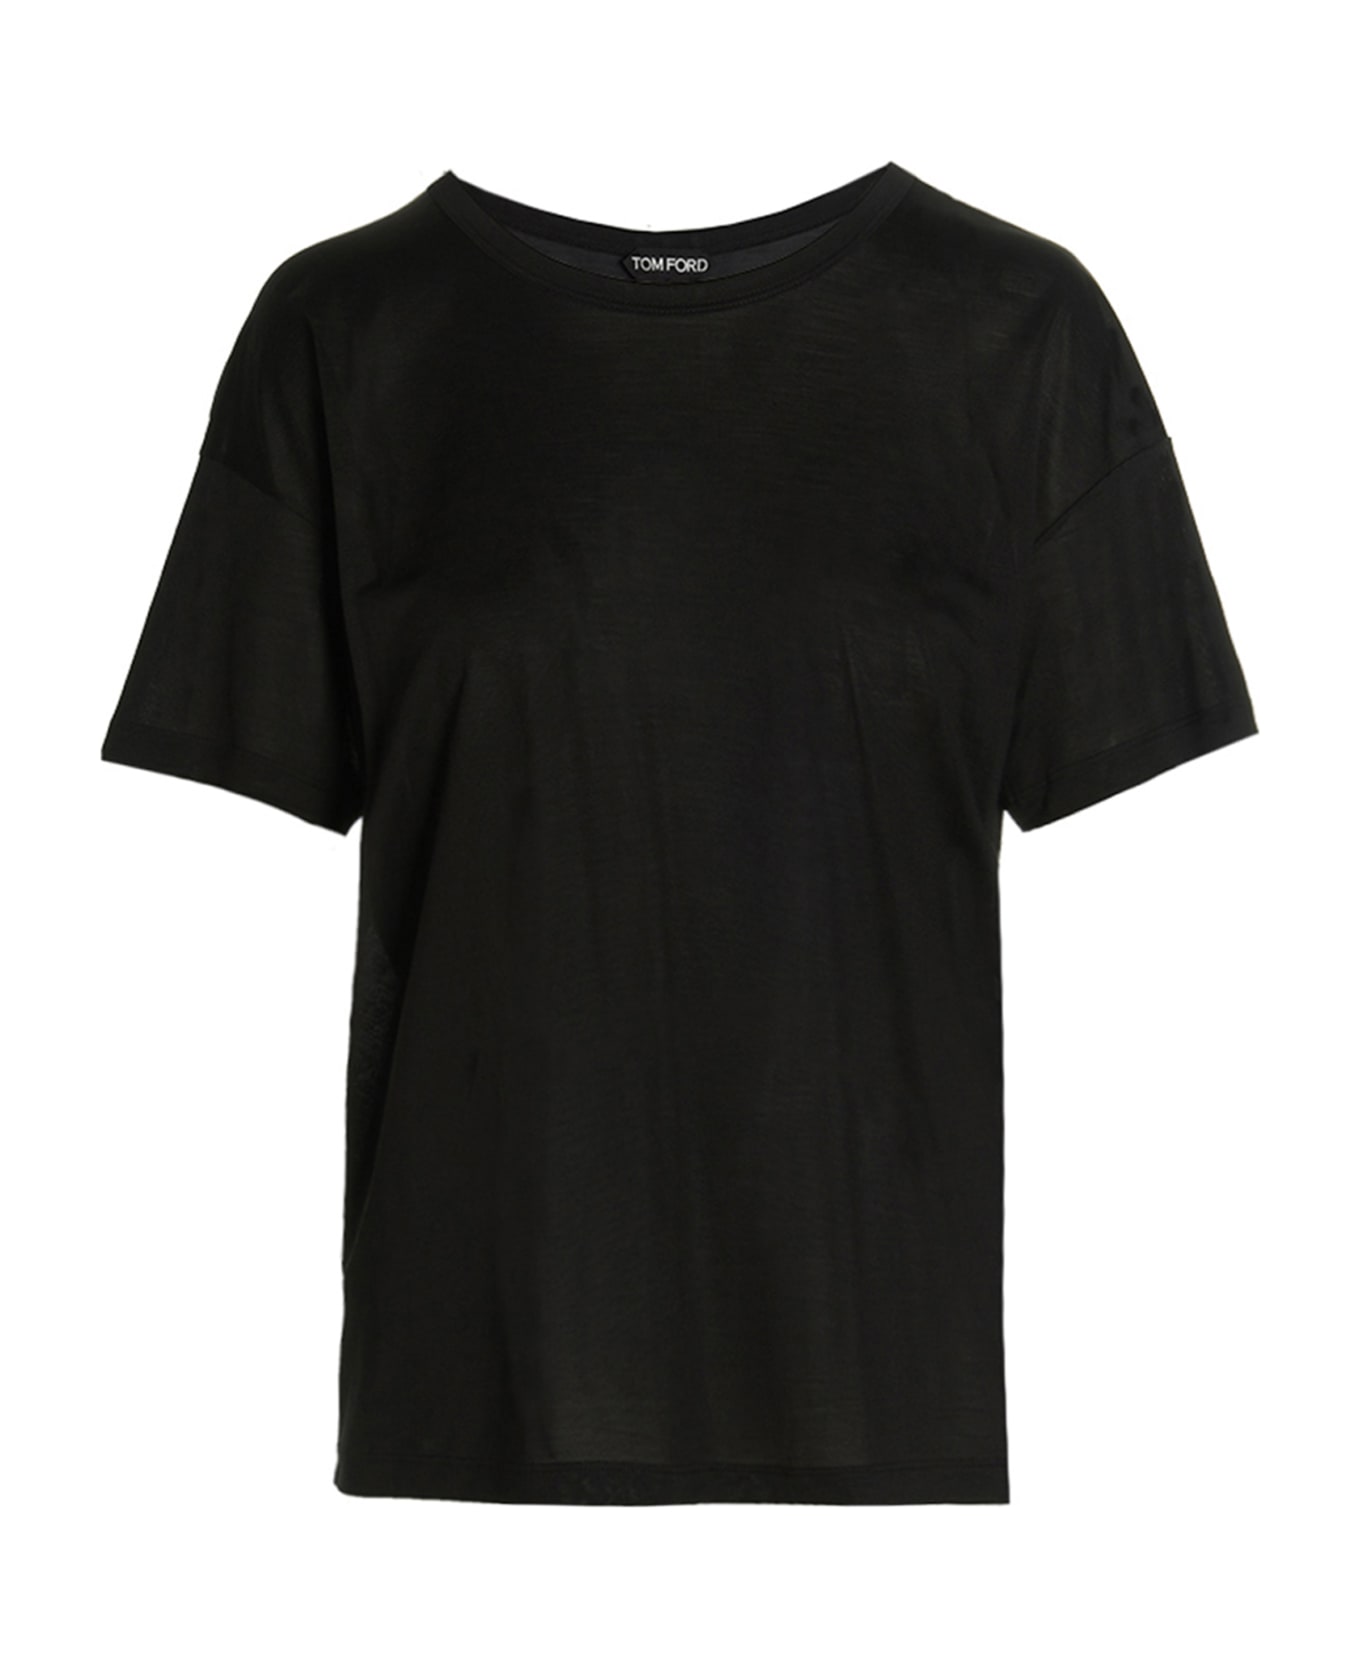 Tom Ford Silk T-shirt - Black  